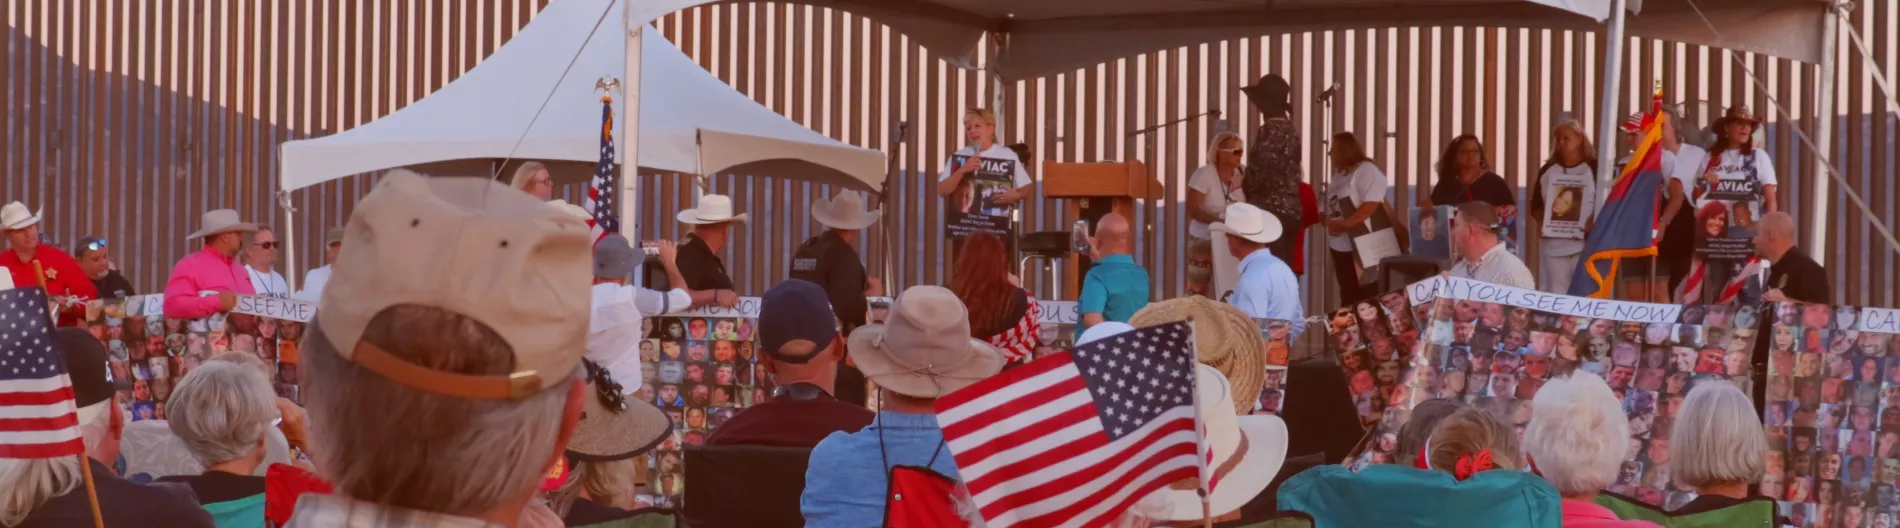 FAIR supporters at border wall ranch in Arizona